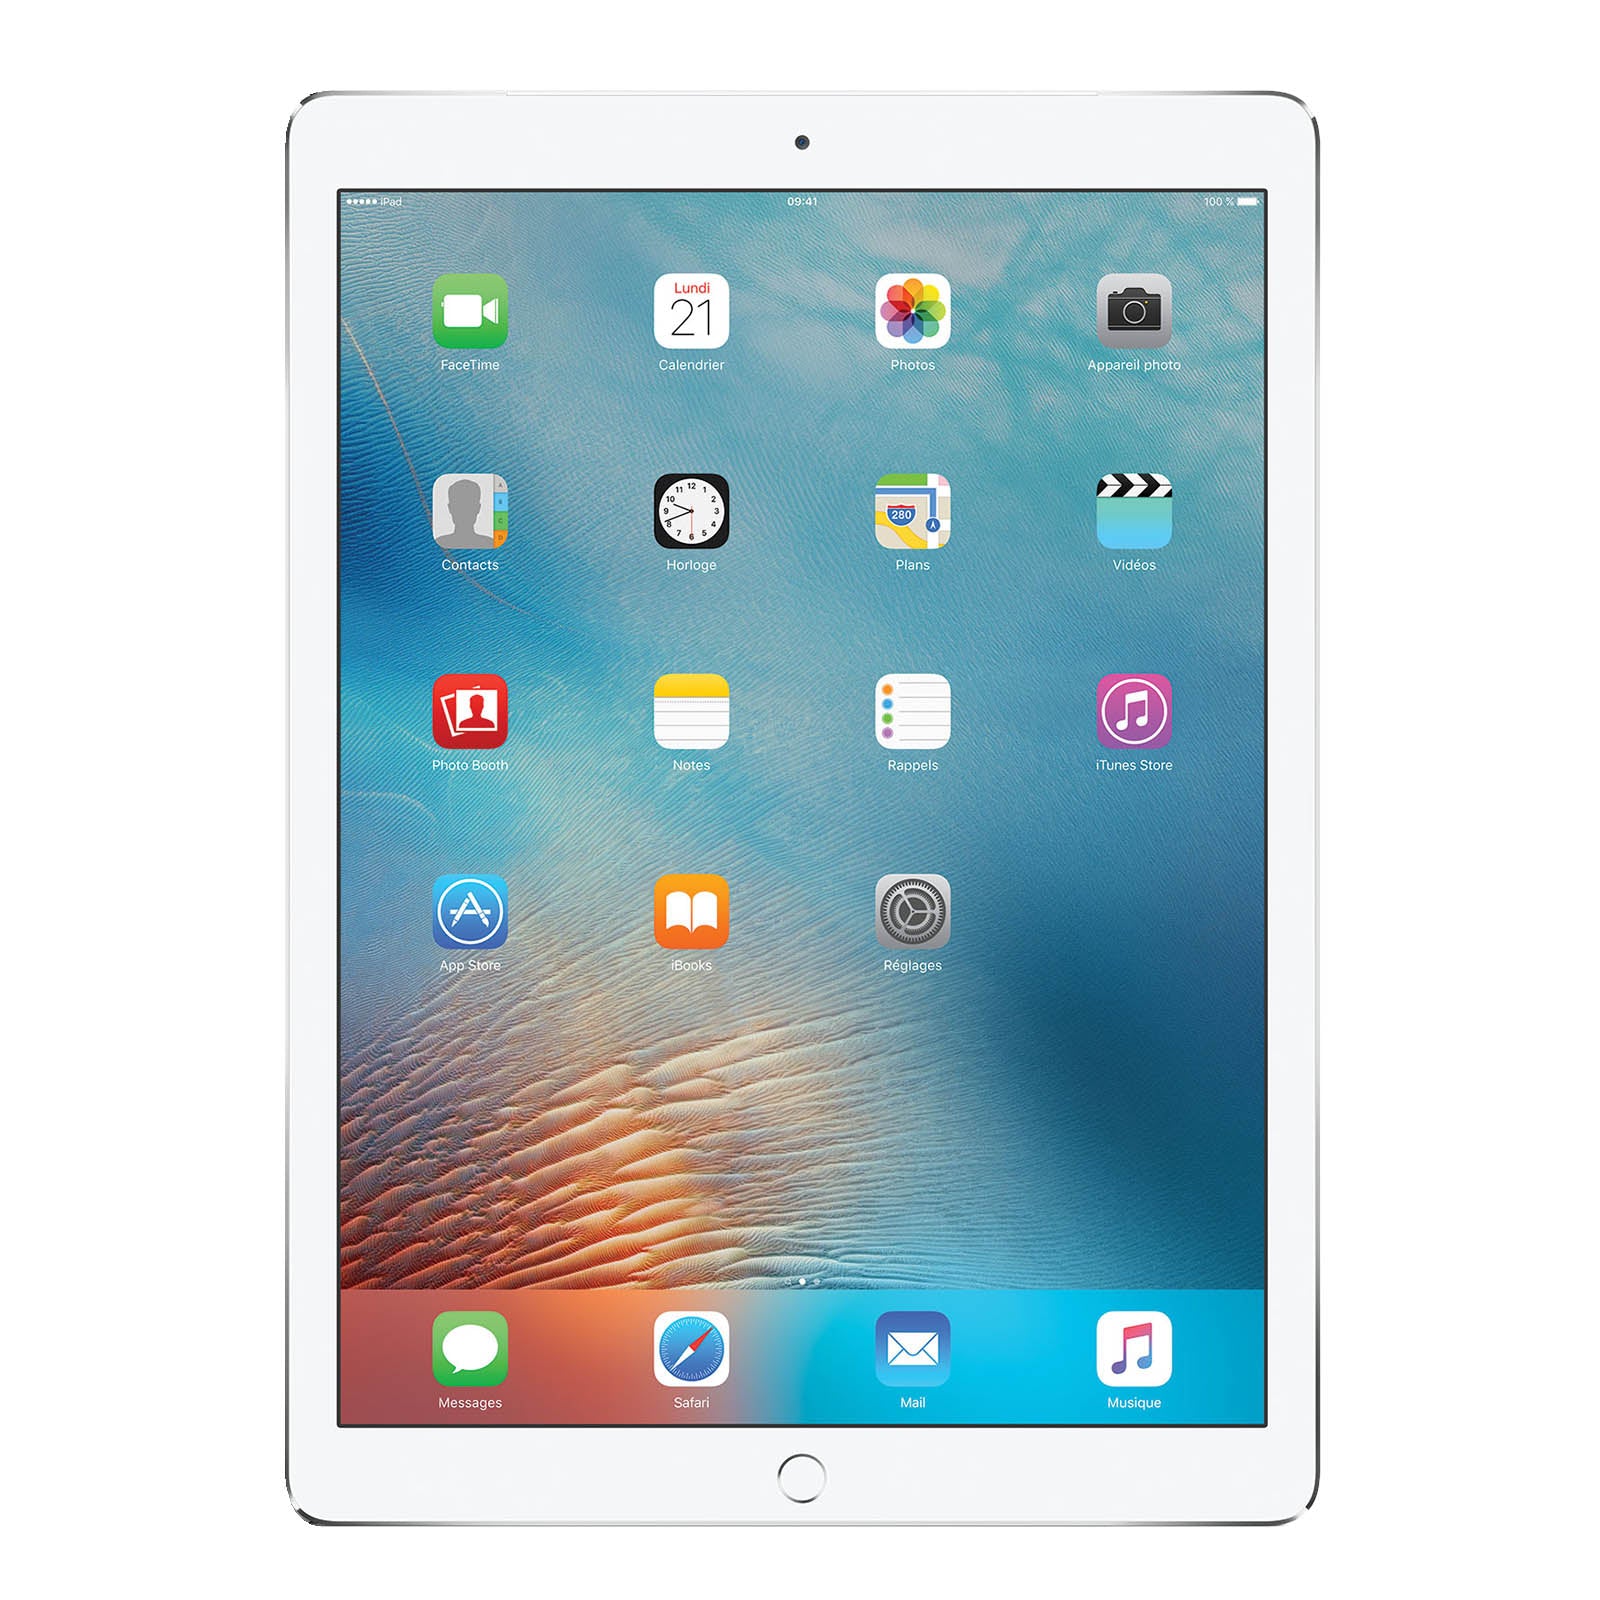 iPad Pro 12.9 Inch 1st Gen 32GB Silver Good - WiFi